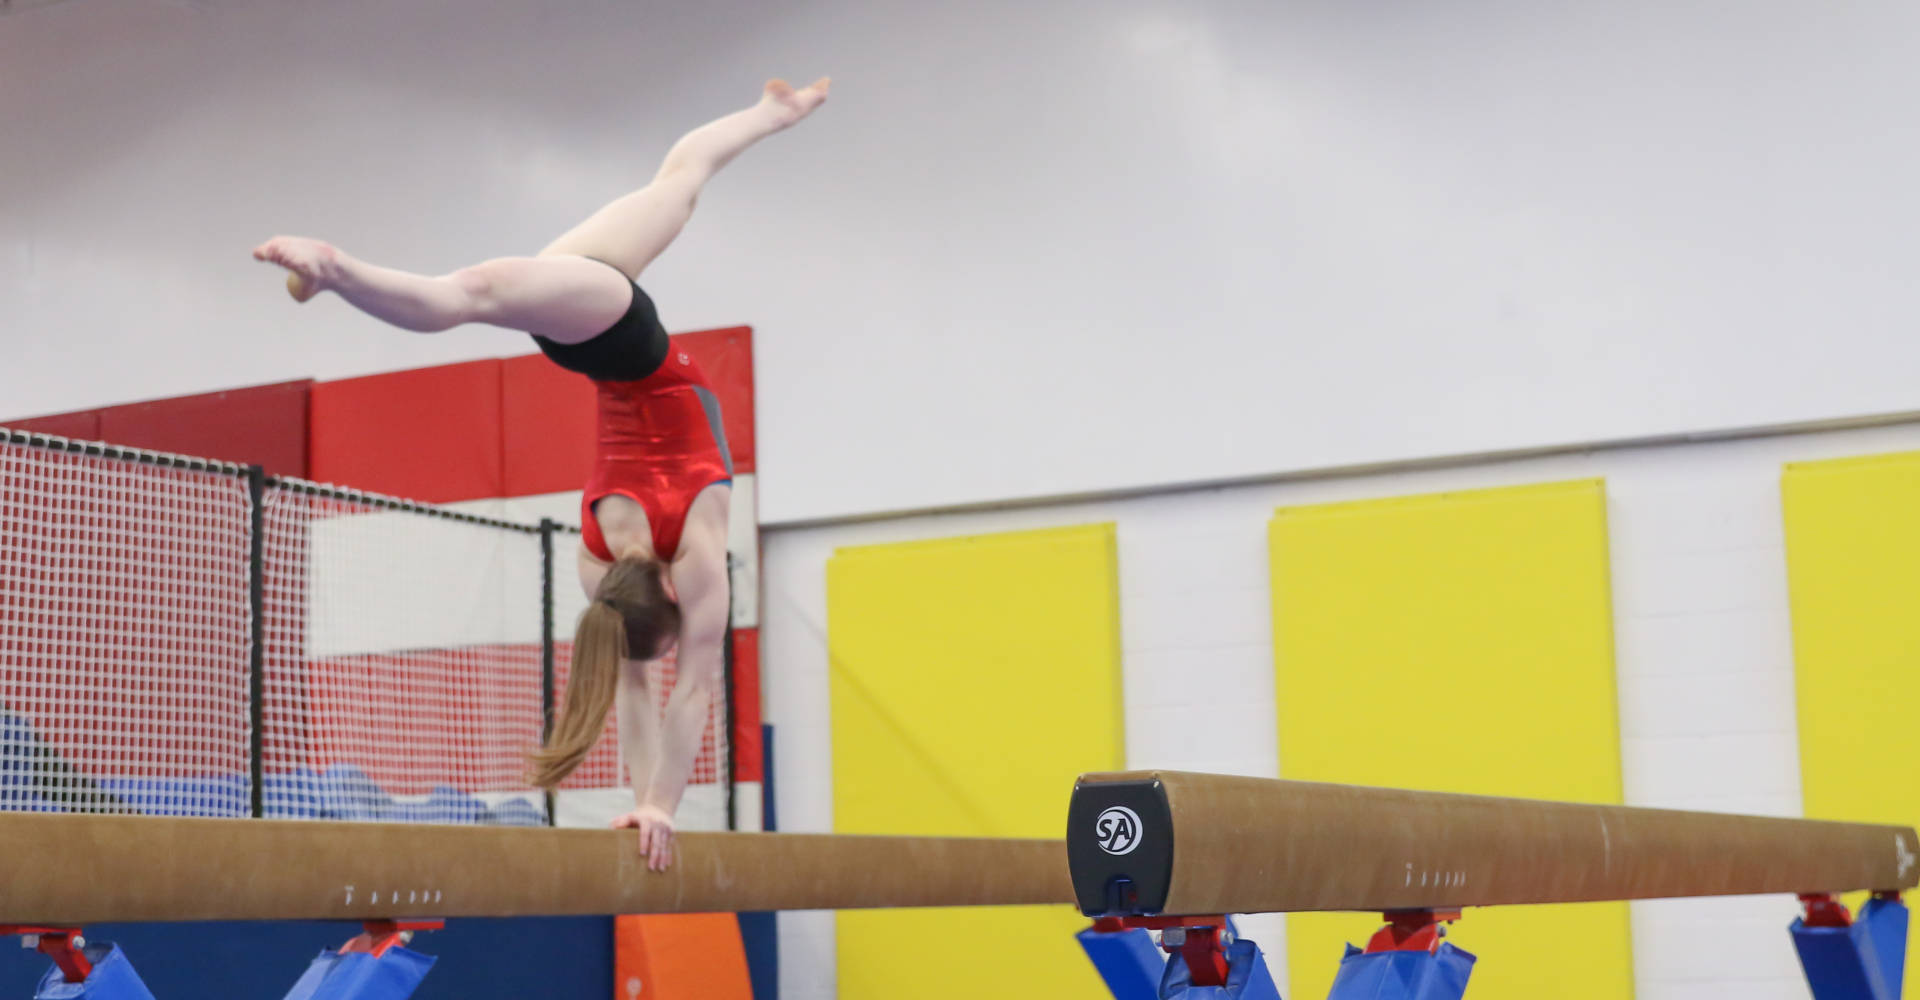 Gymnast performing a back walkover on a balance beam at Gymworld gymnastics facility in Northwest London